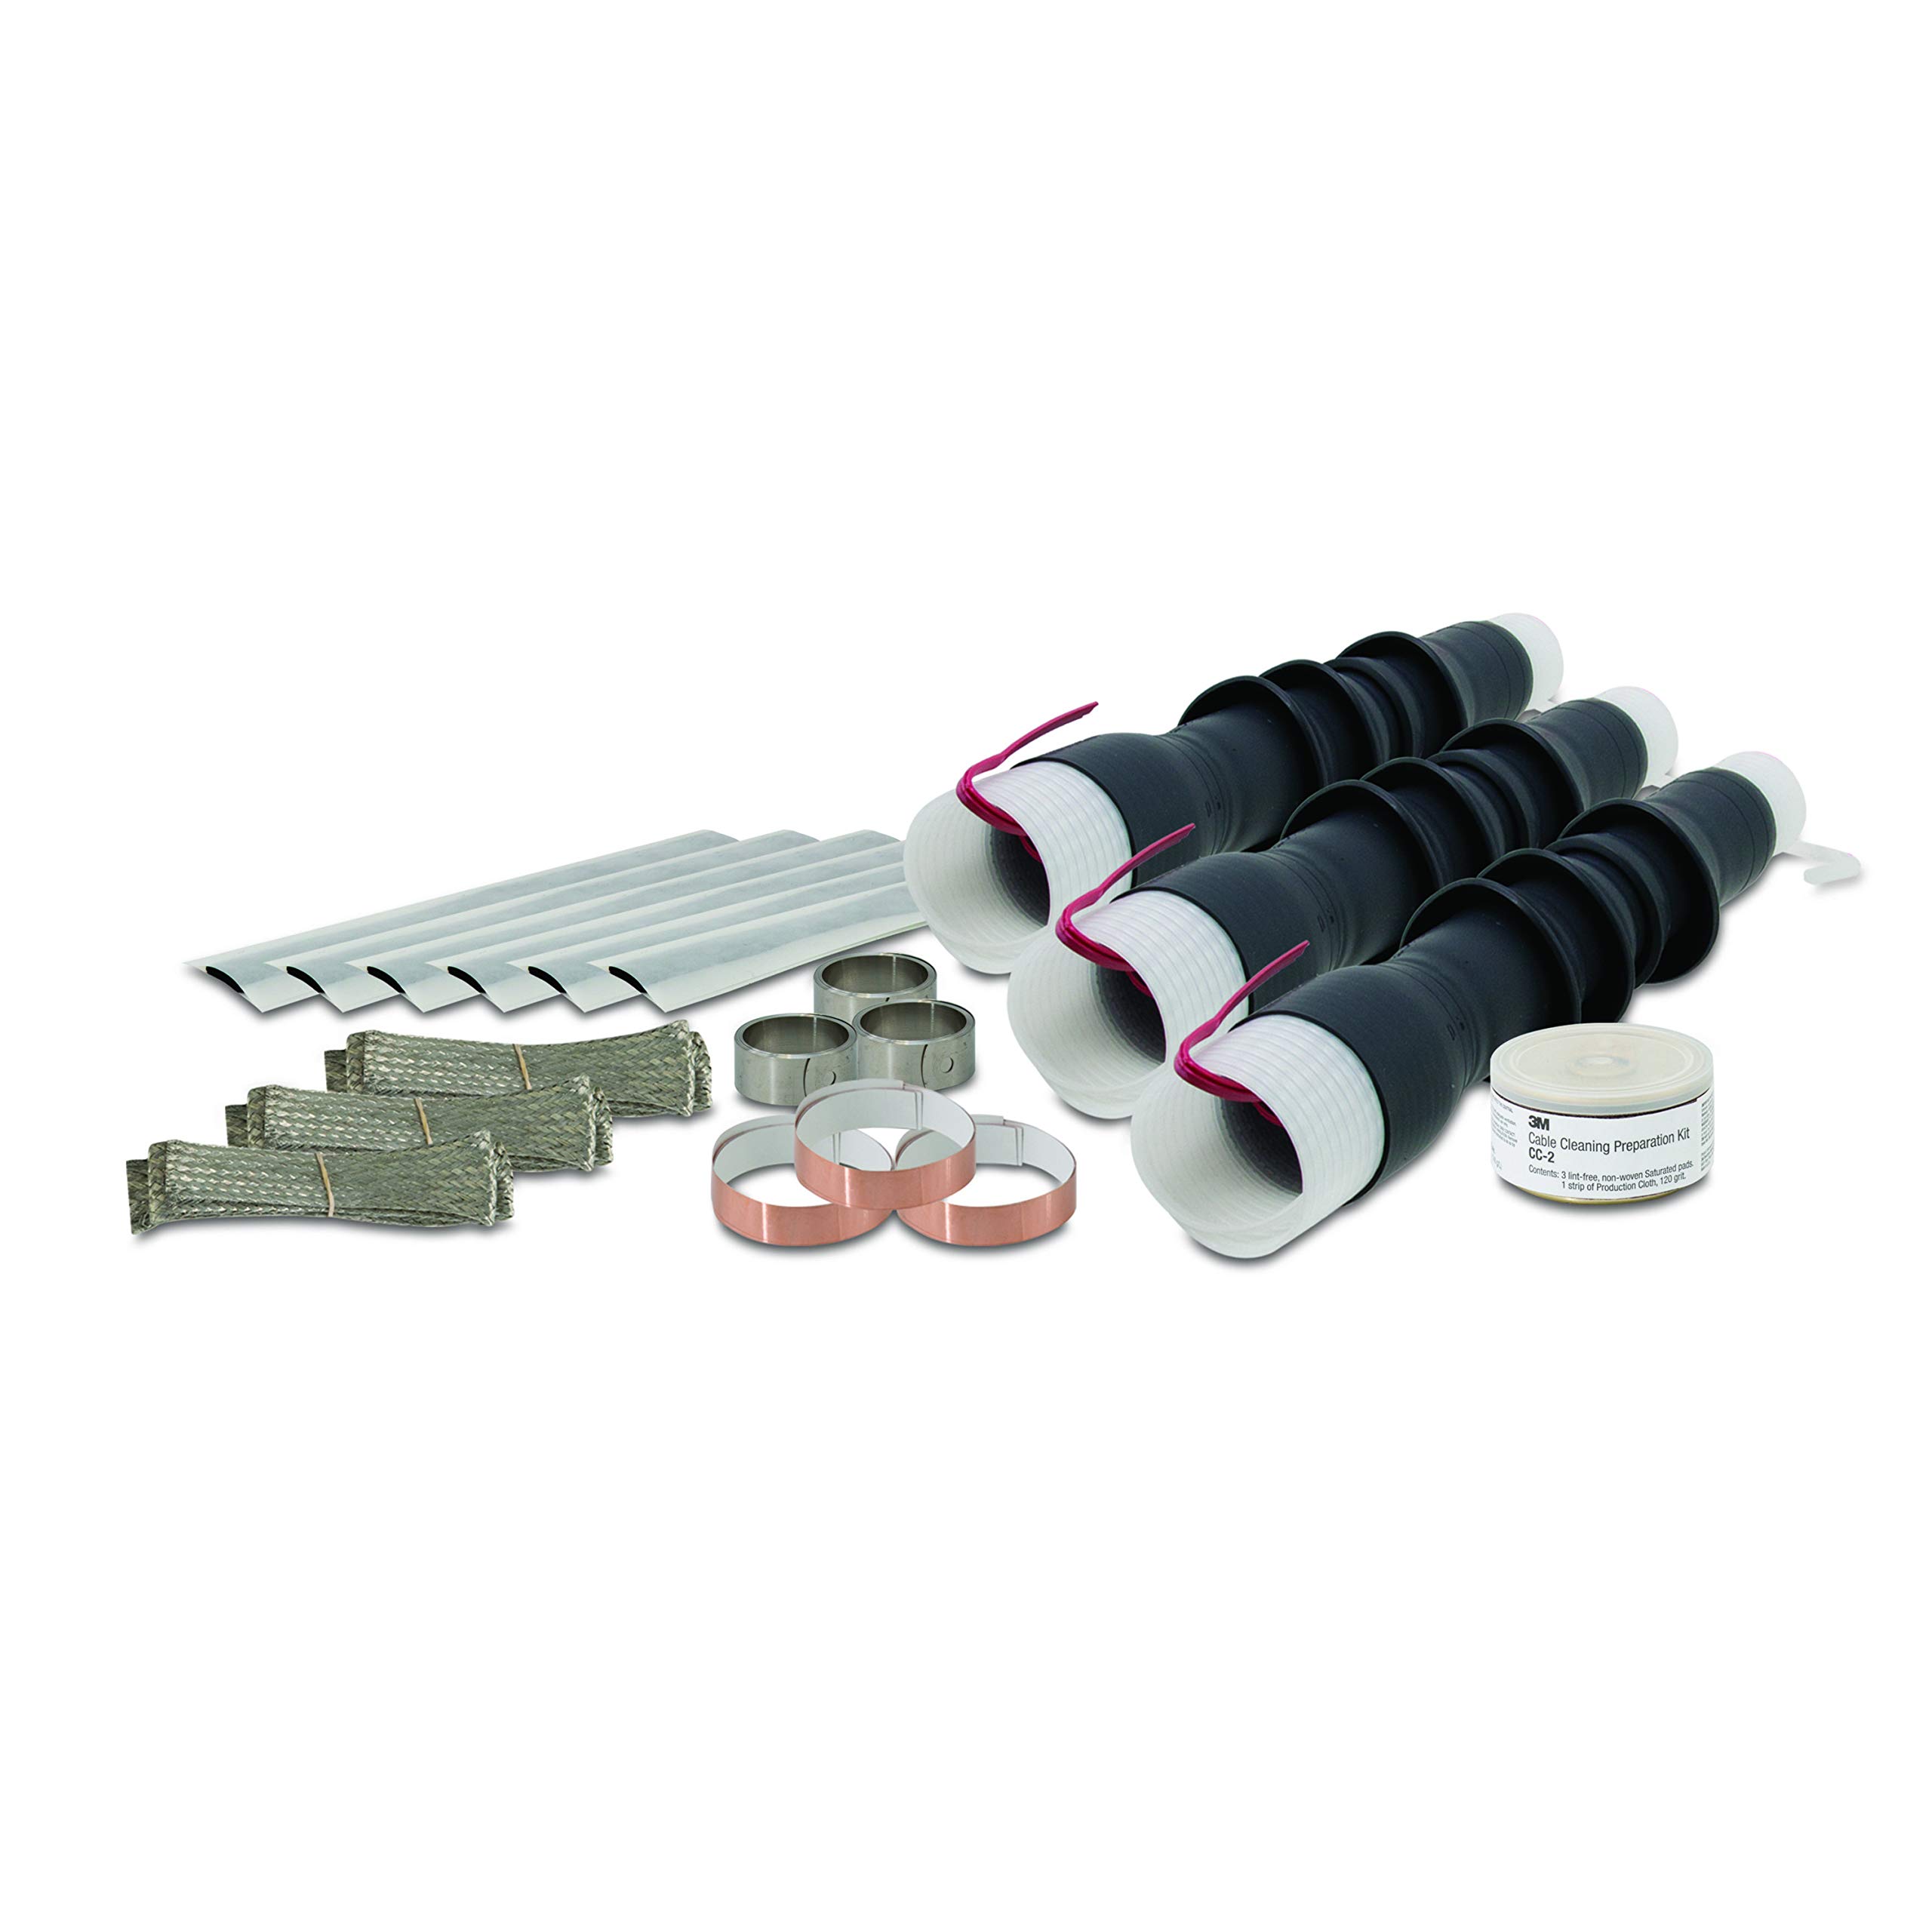 Cold Shrink QT-III 3/C Termination Kit 7693-T-150-3G, Tape/Wire/UniShield®, 5-25 kV, Insulation OD 0.70-0.92 in, 3/kit